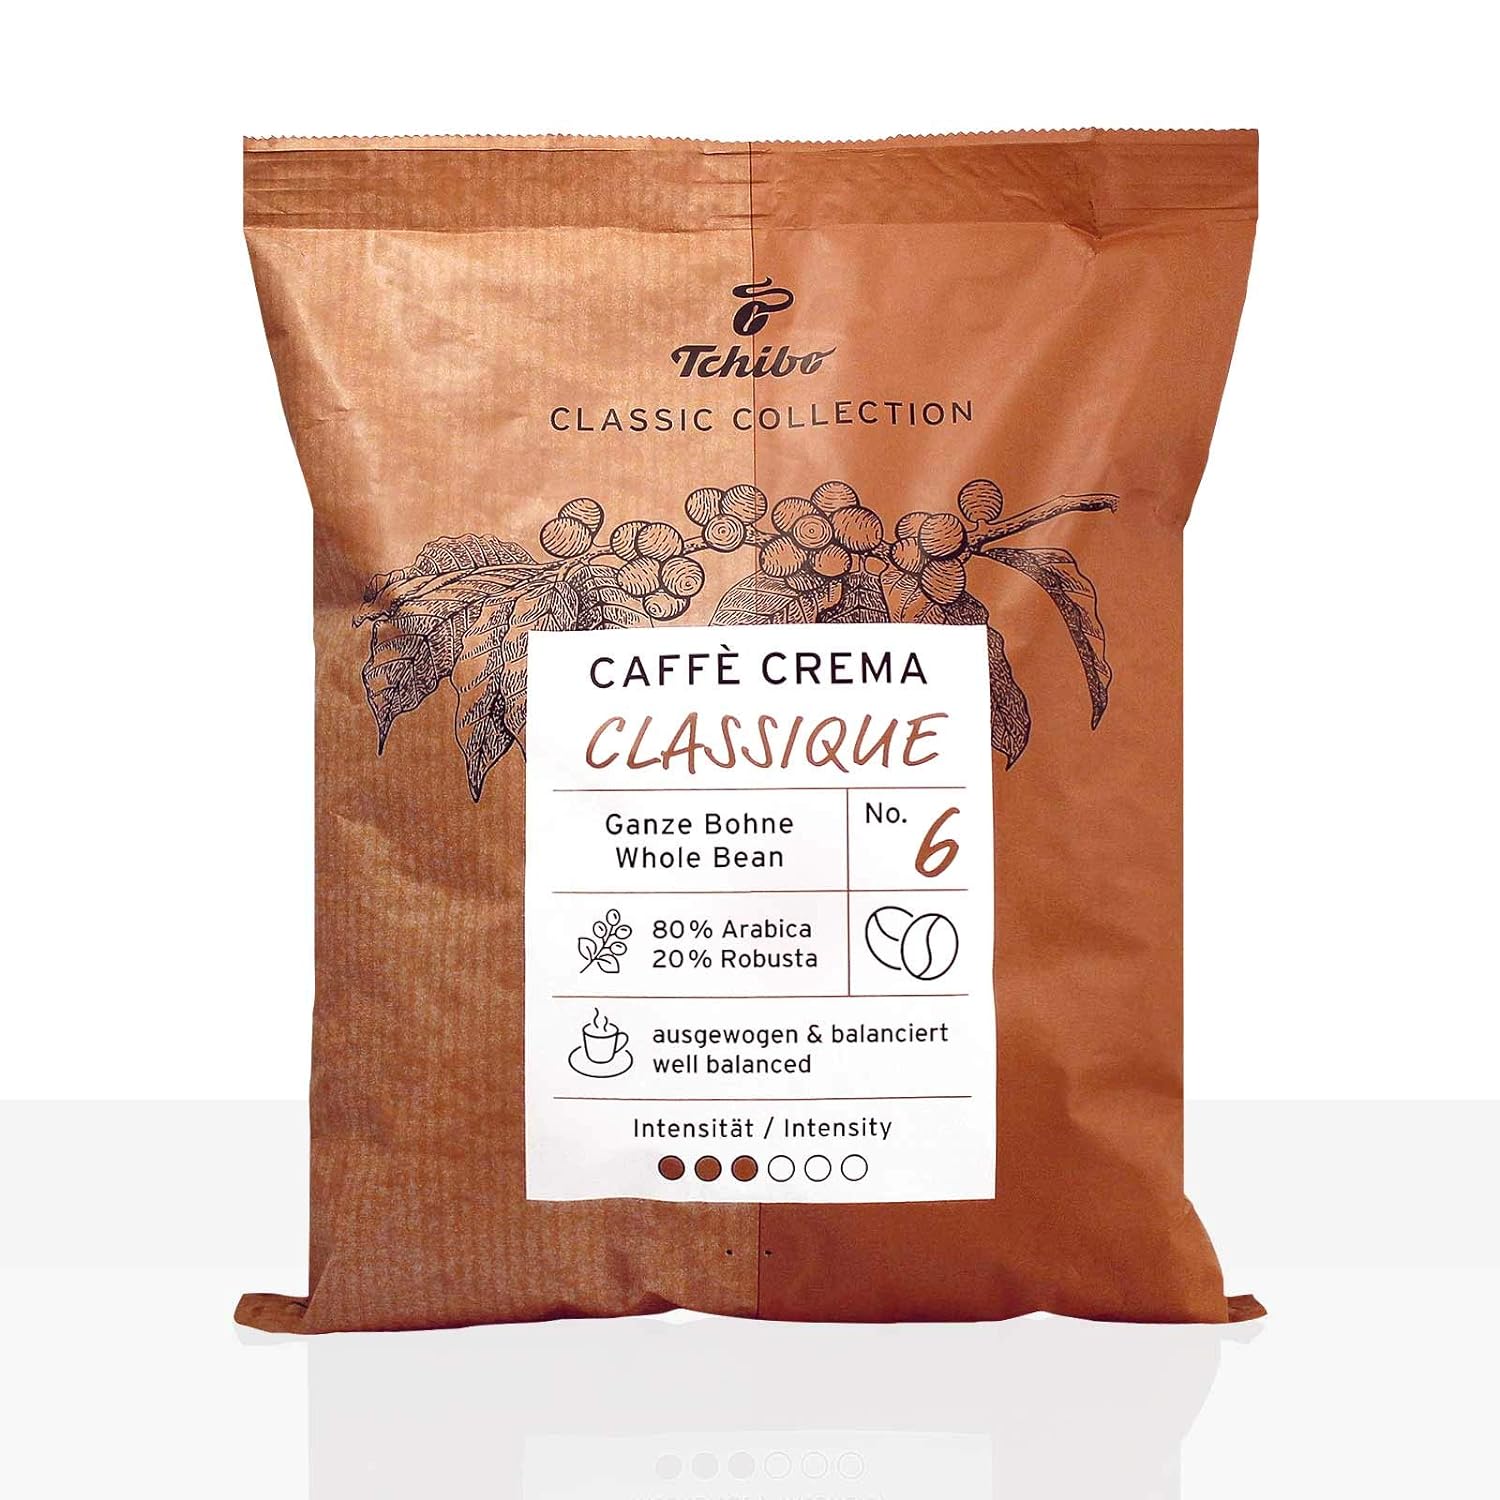 Tchibo Caffe Crema Classique - 500g entire coffee beans